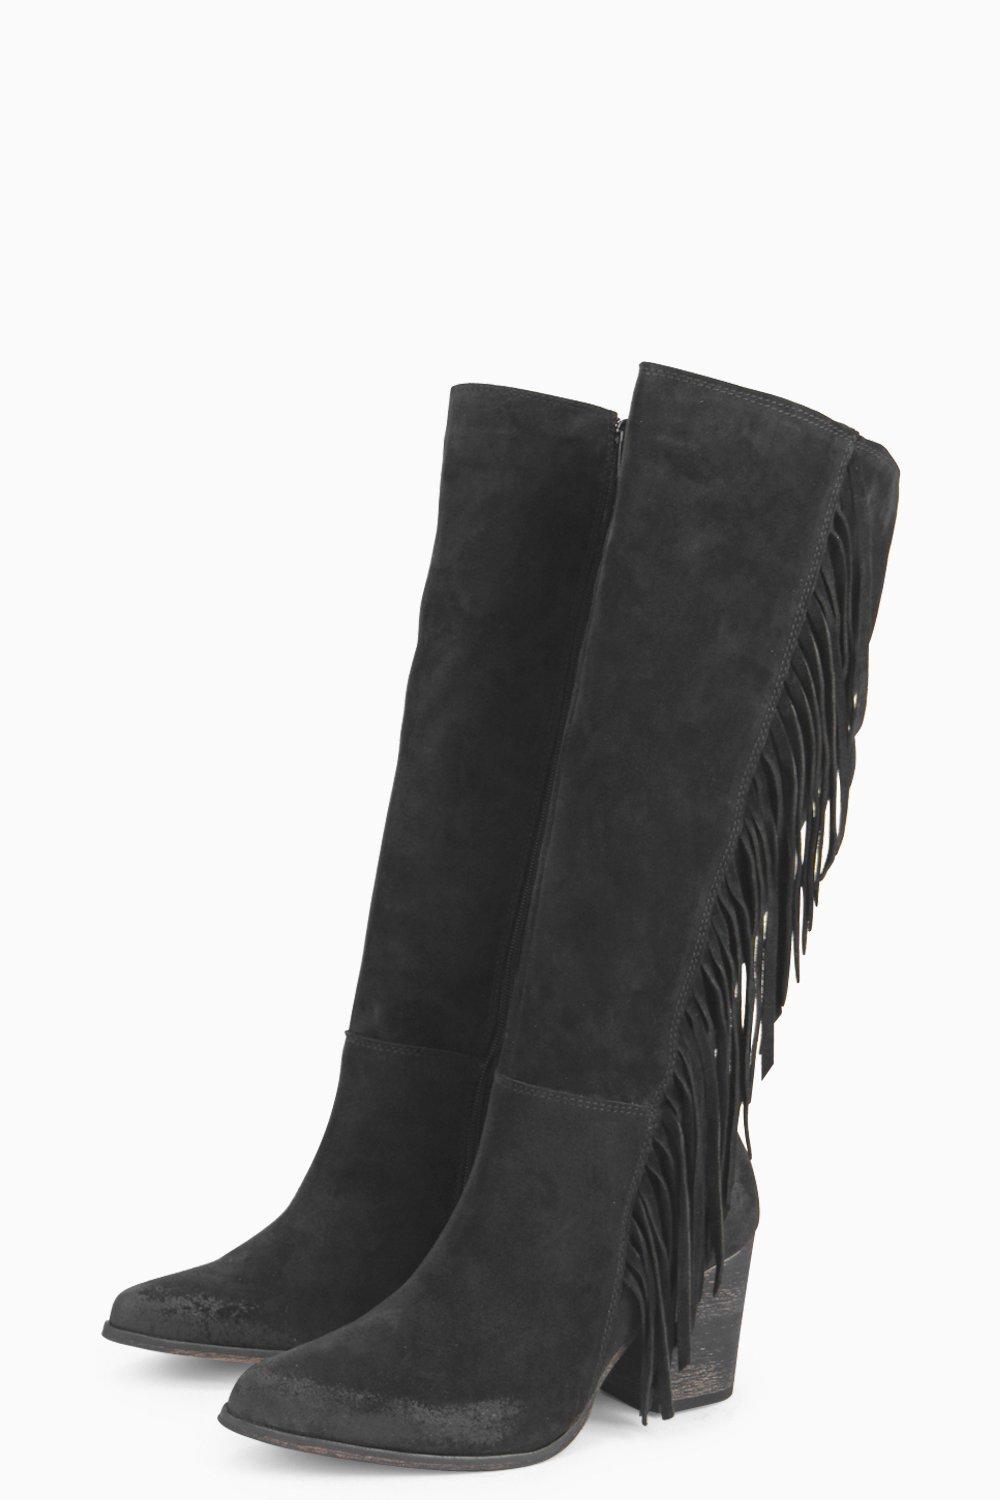 Boohoo Womens Boutique Isabel Leather Fringe Side Knee Boot | eBay